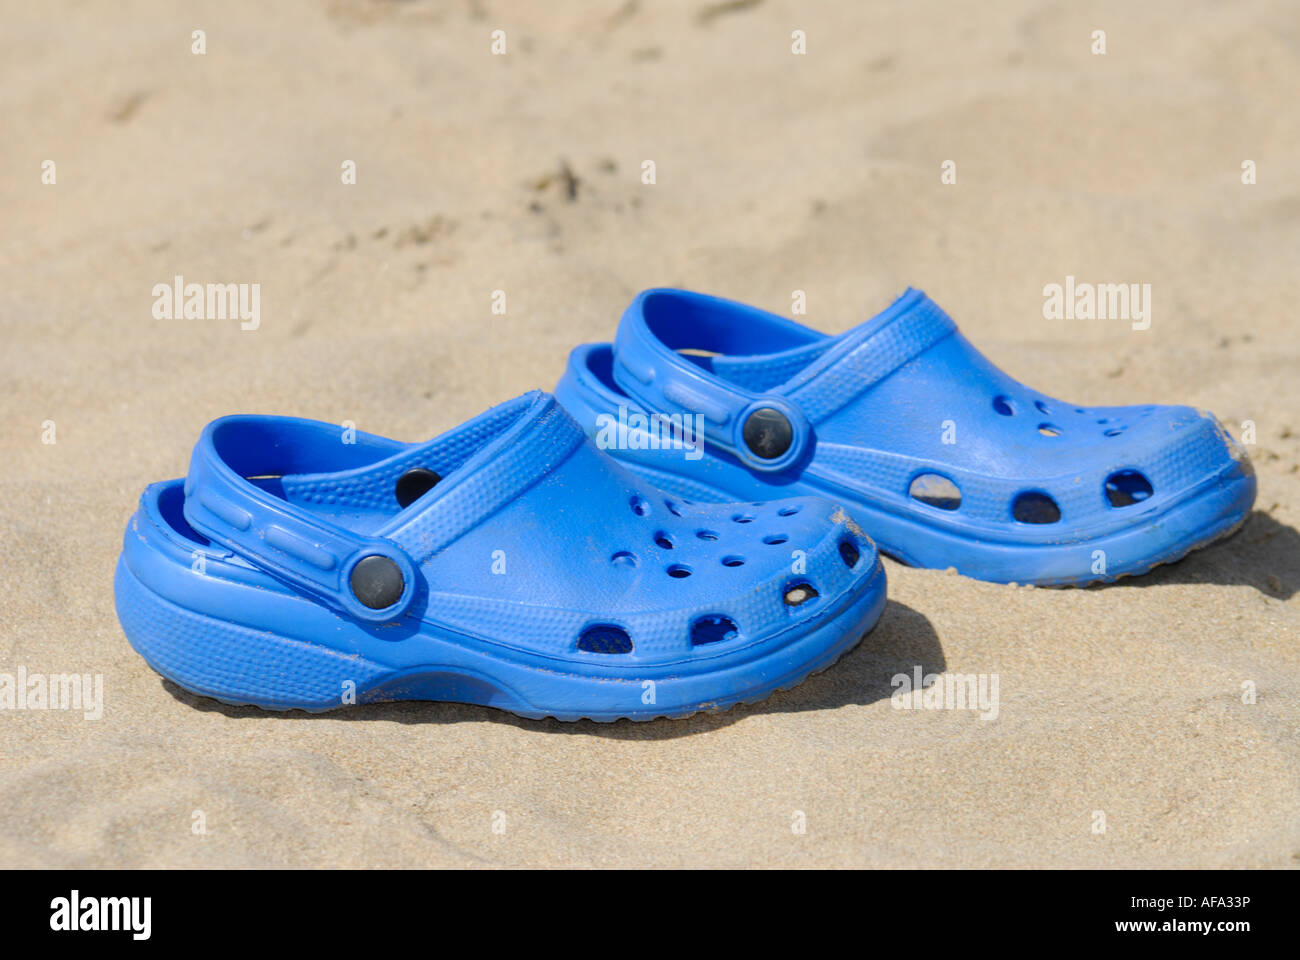 Pair of Crocs Beach Sandals Stock Photo 